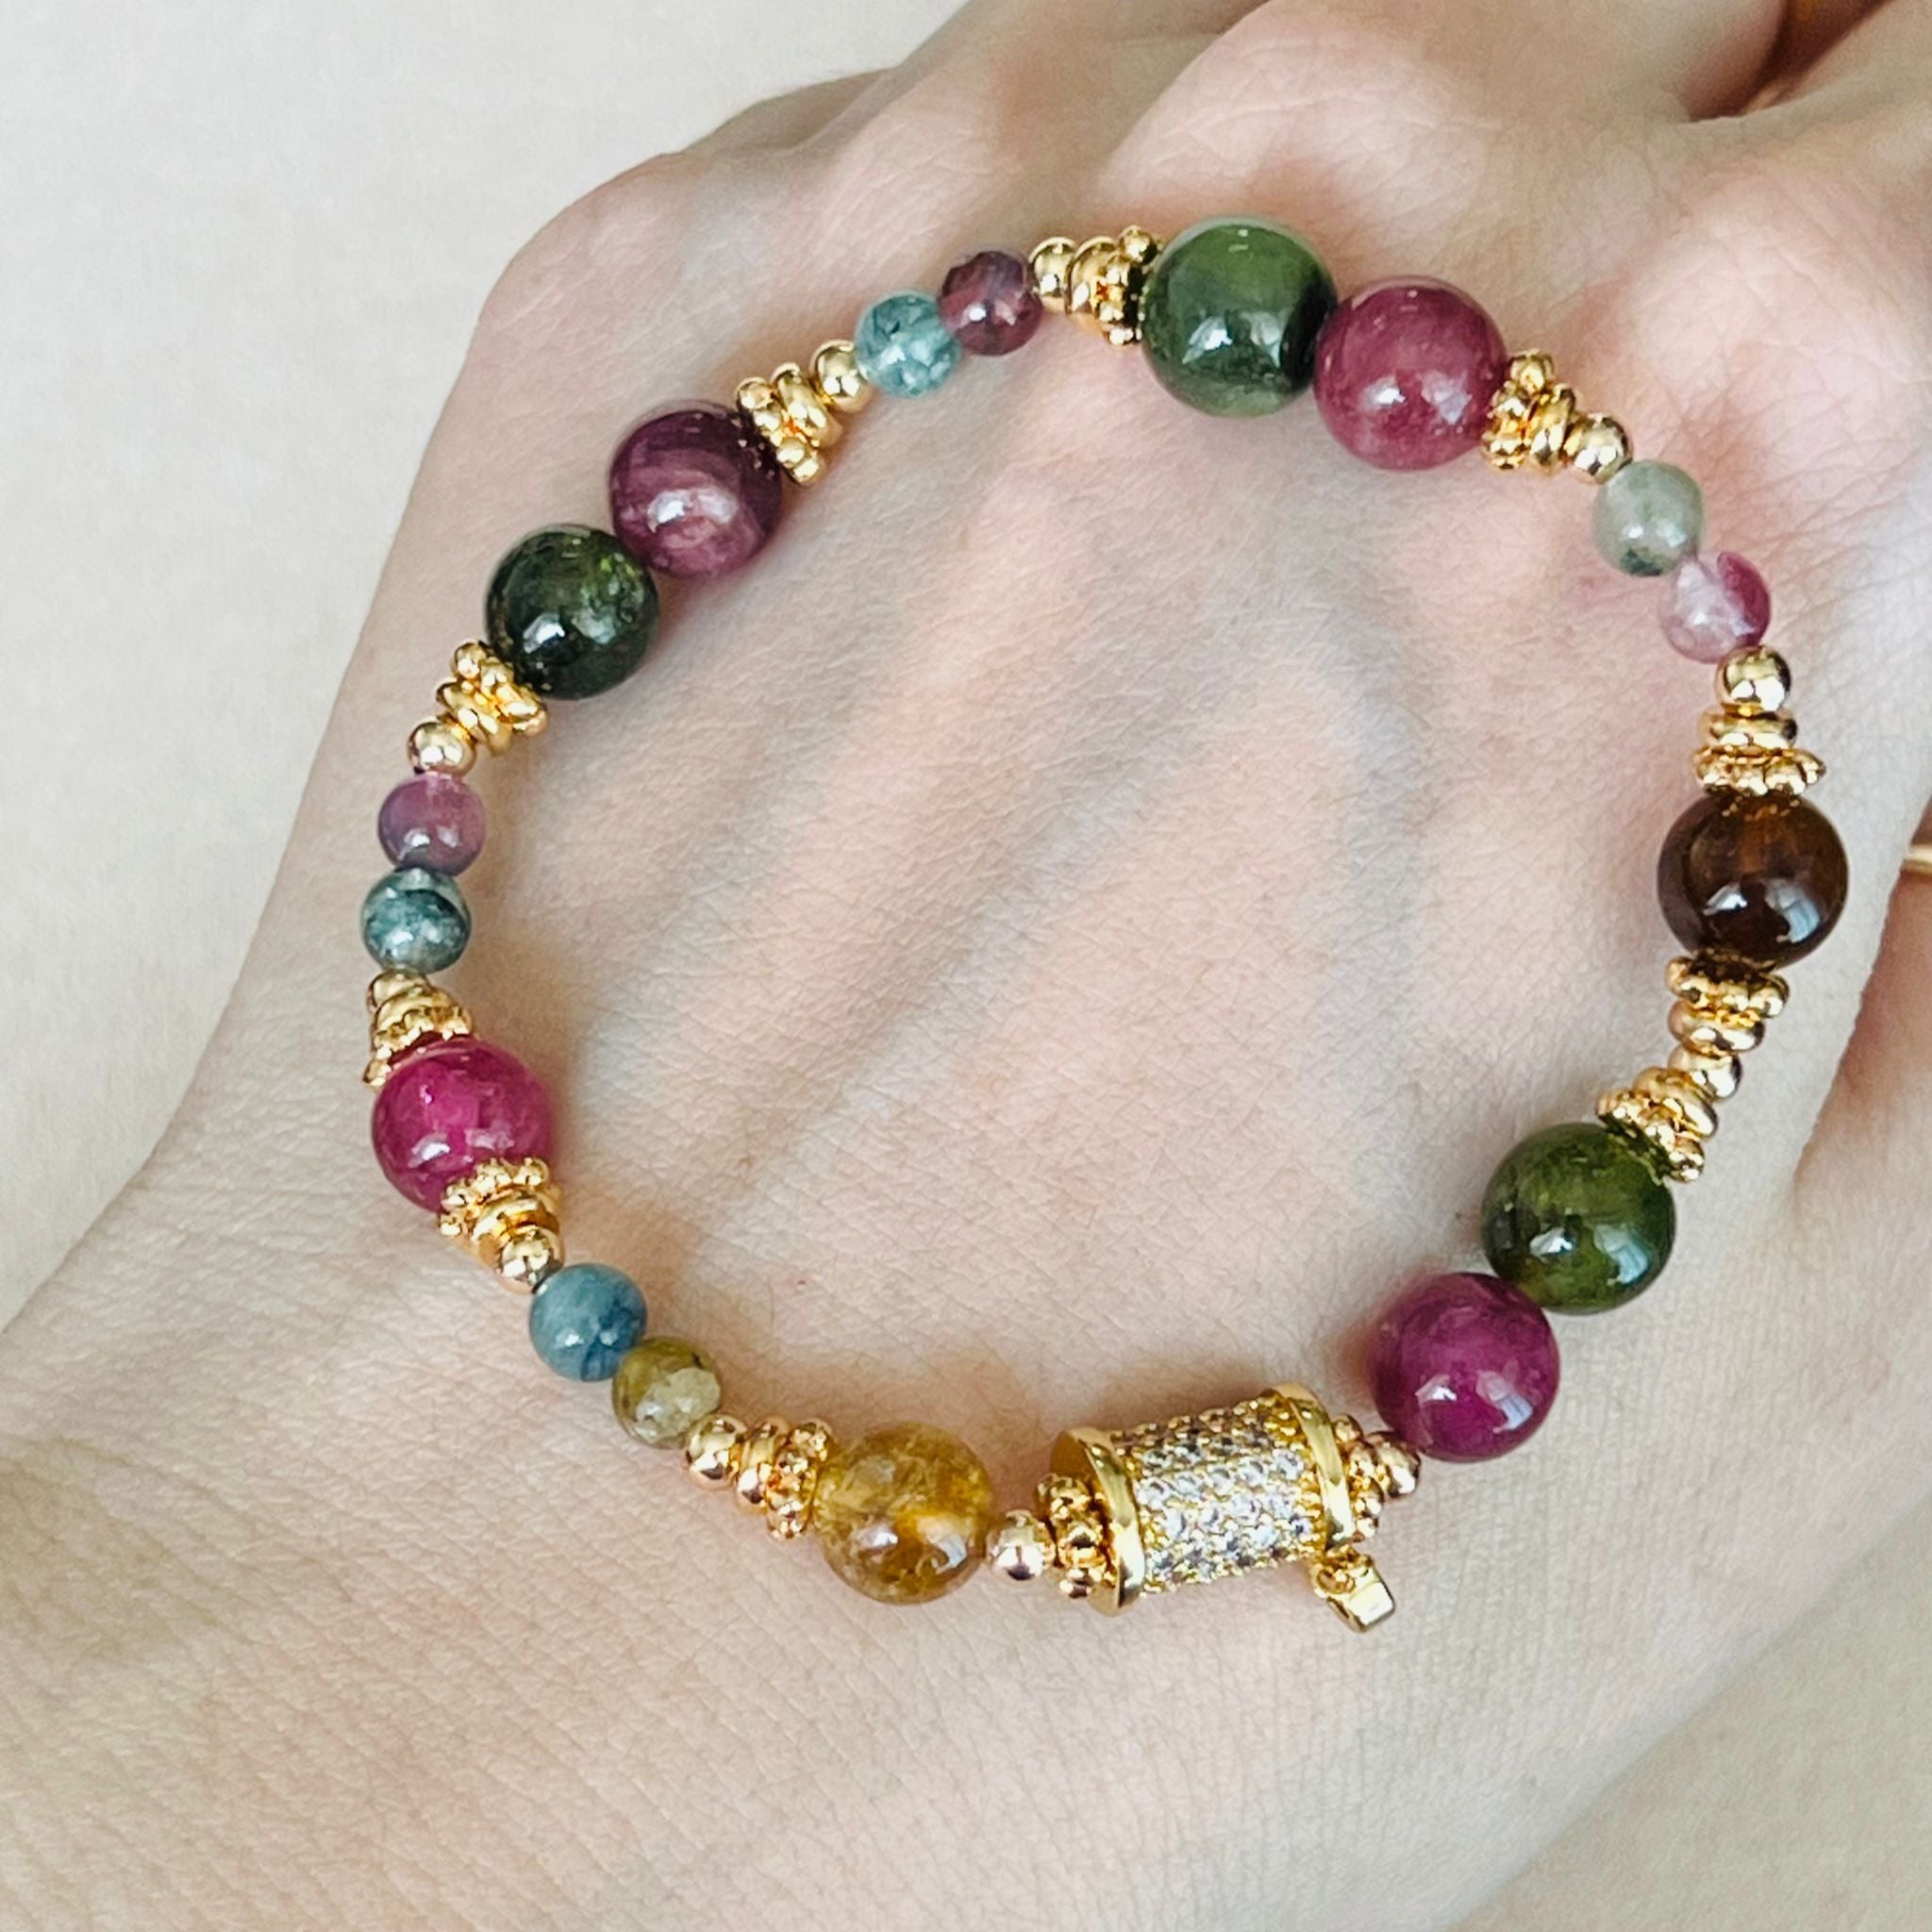 Tourmaline Crystal Beaded Multi-Colored Bracelet from Mexico - Earthy  Rainbow | NOVICA